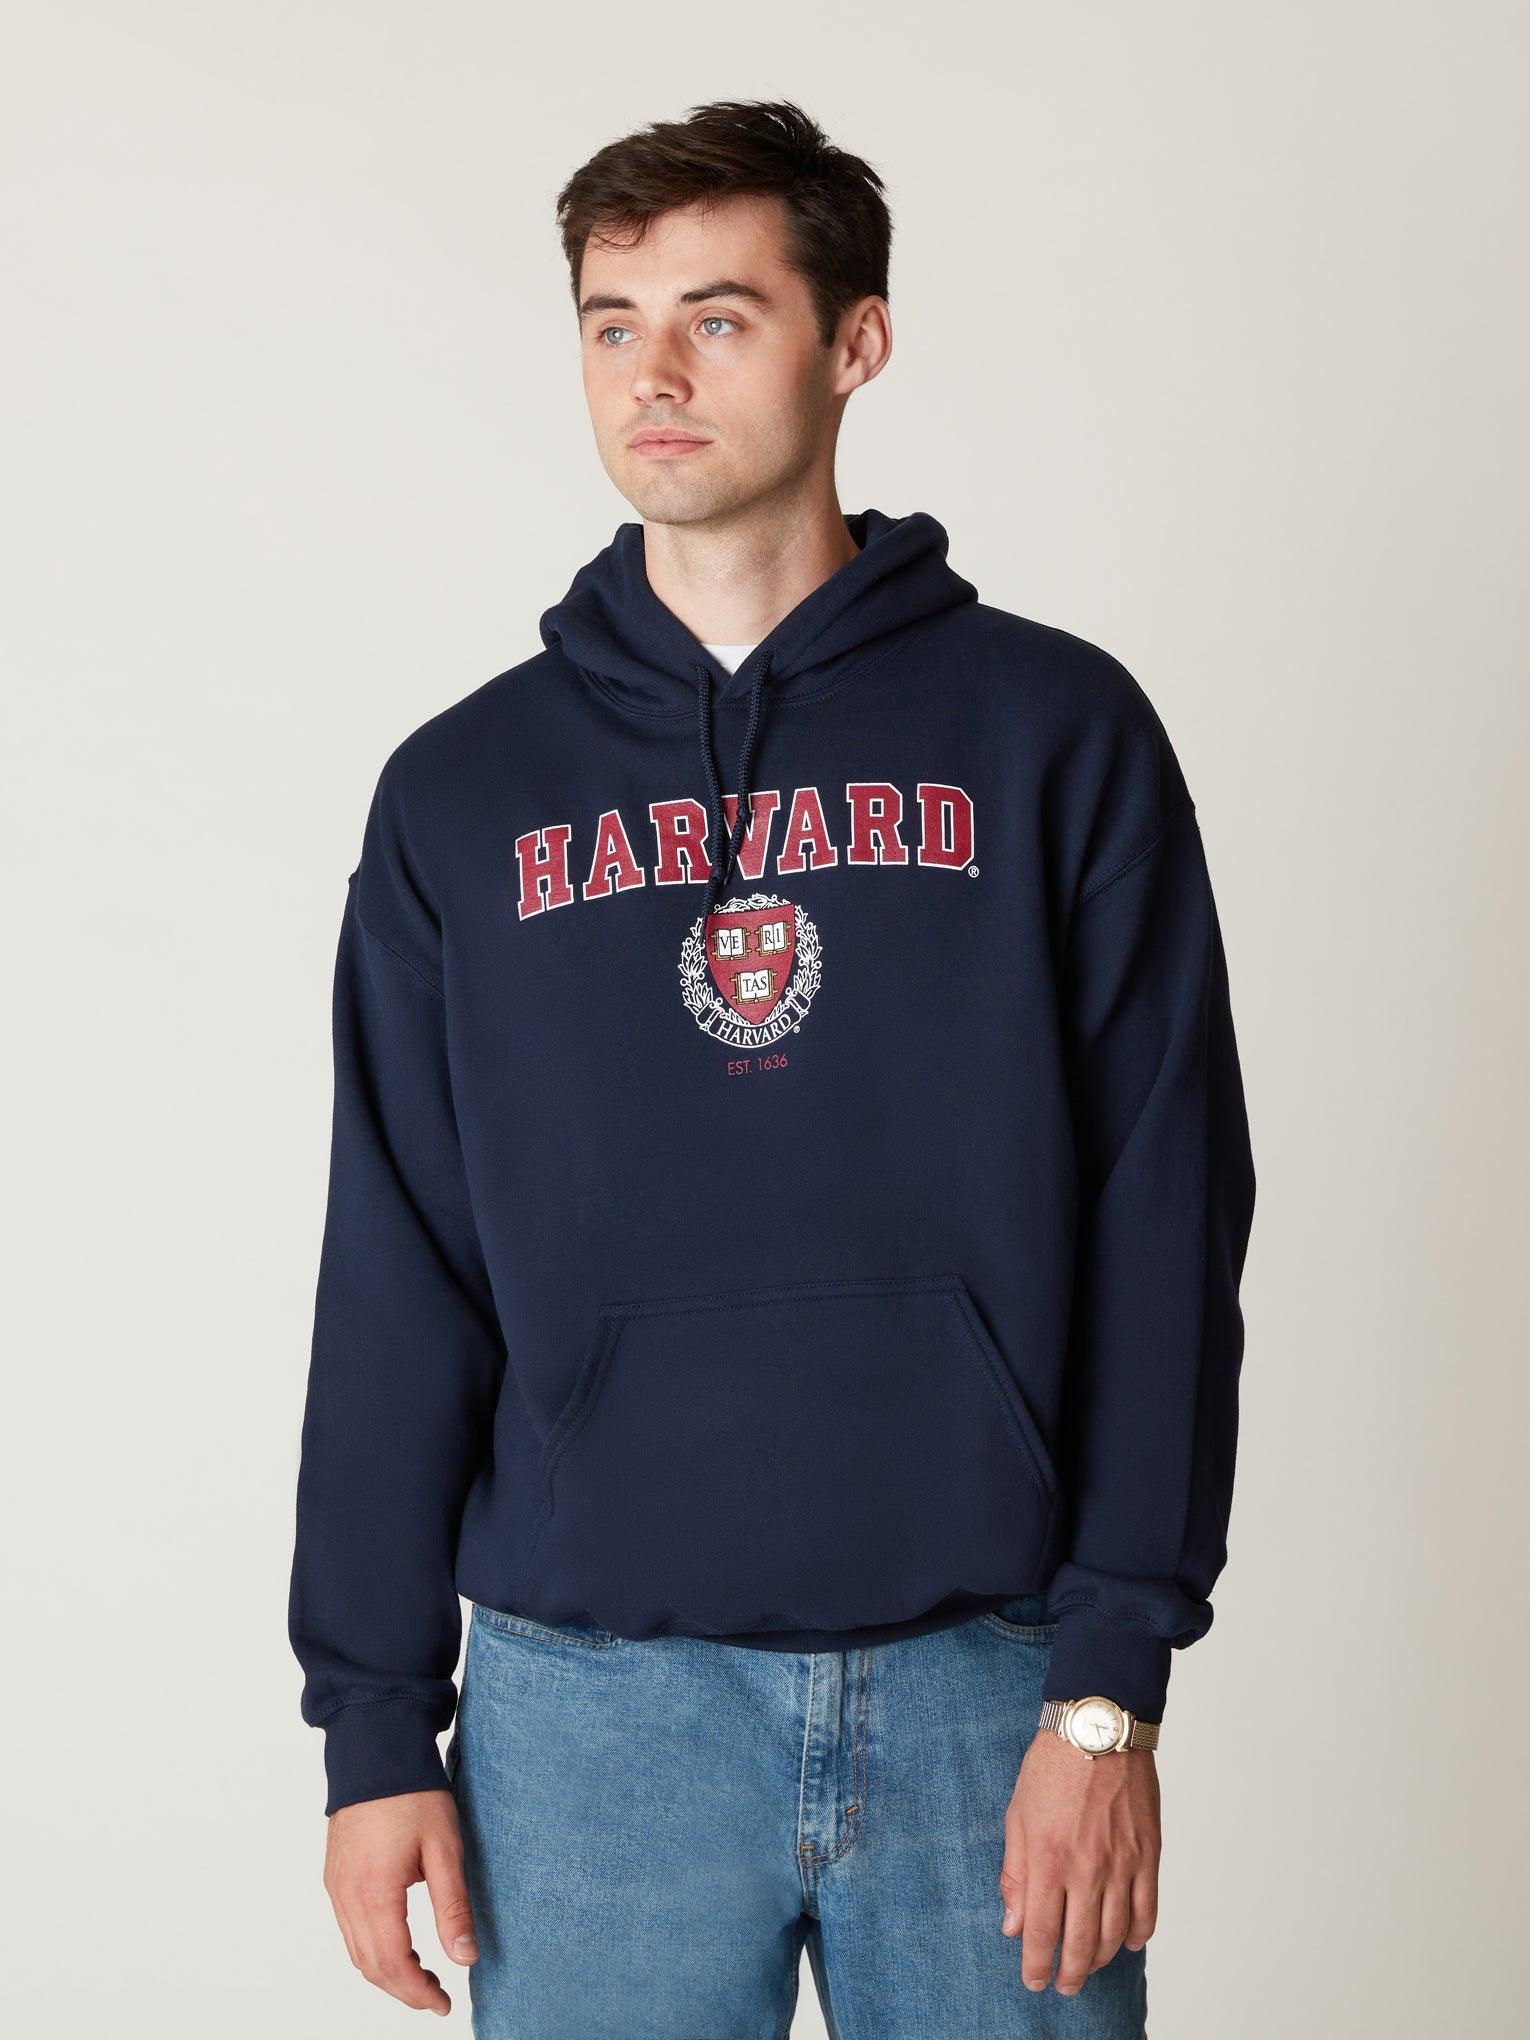 Crest Harvard Sweatshirt – The Harvard Shop Hooded